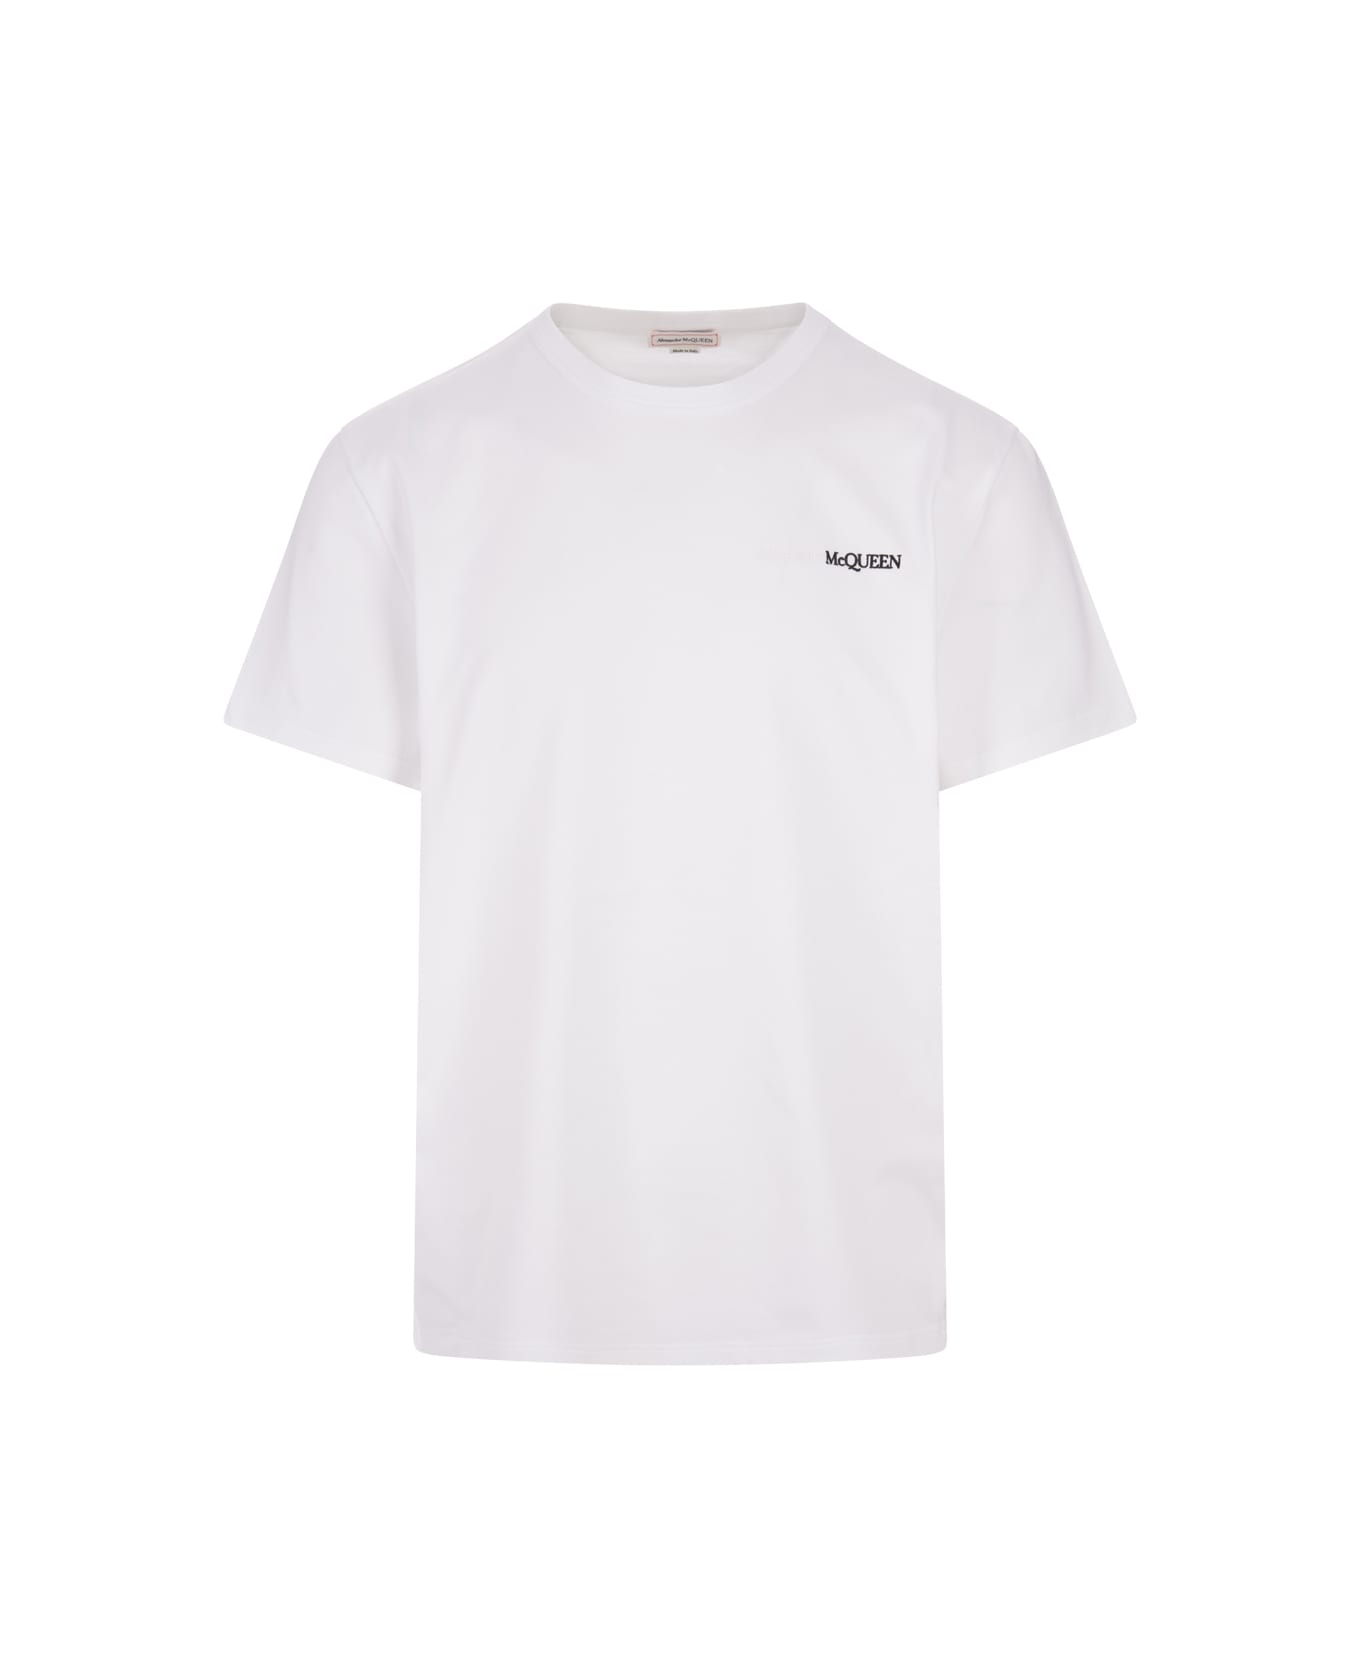 Alexander McQueen White T-shirt With Two-tone Logo - White